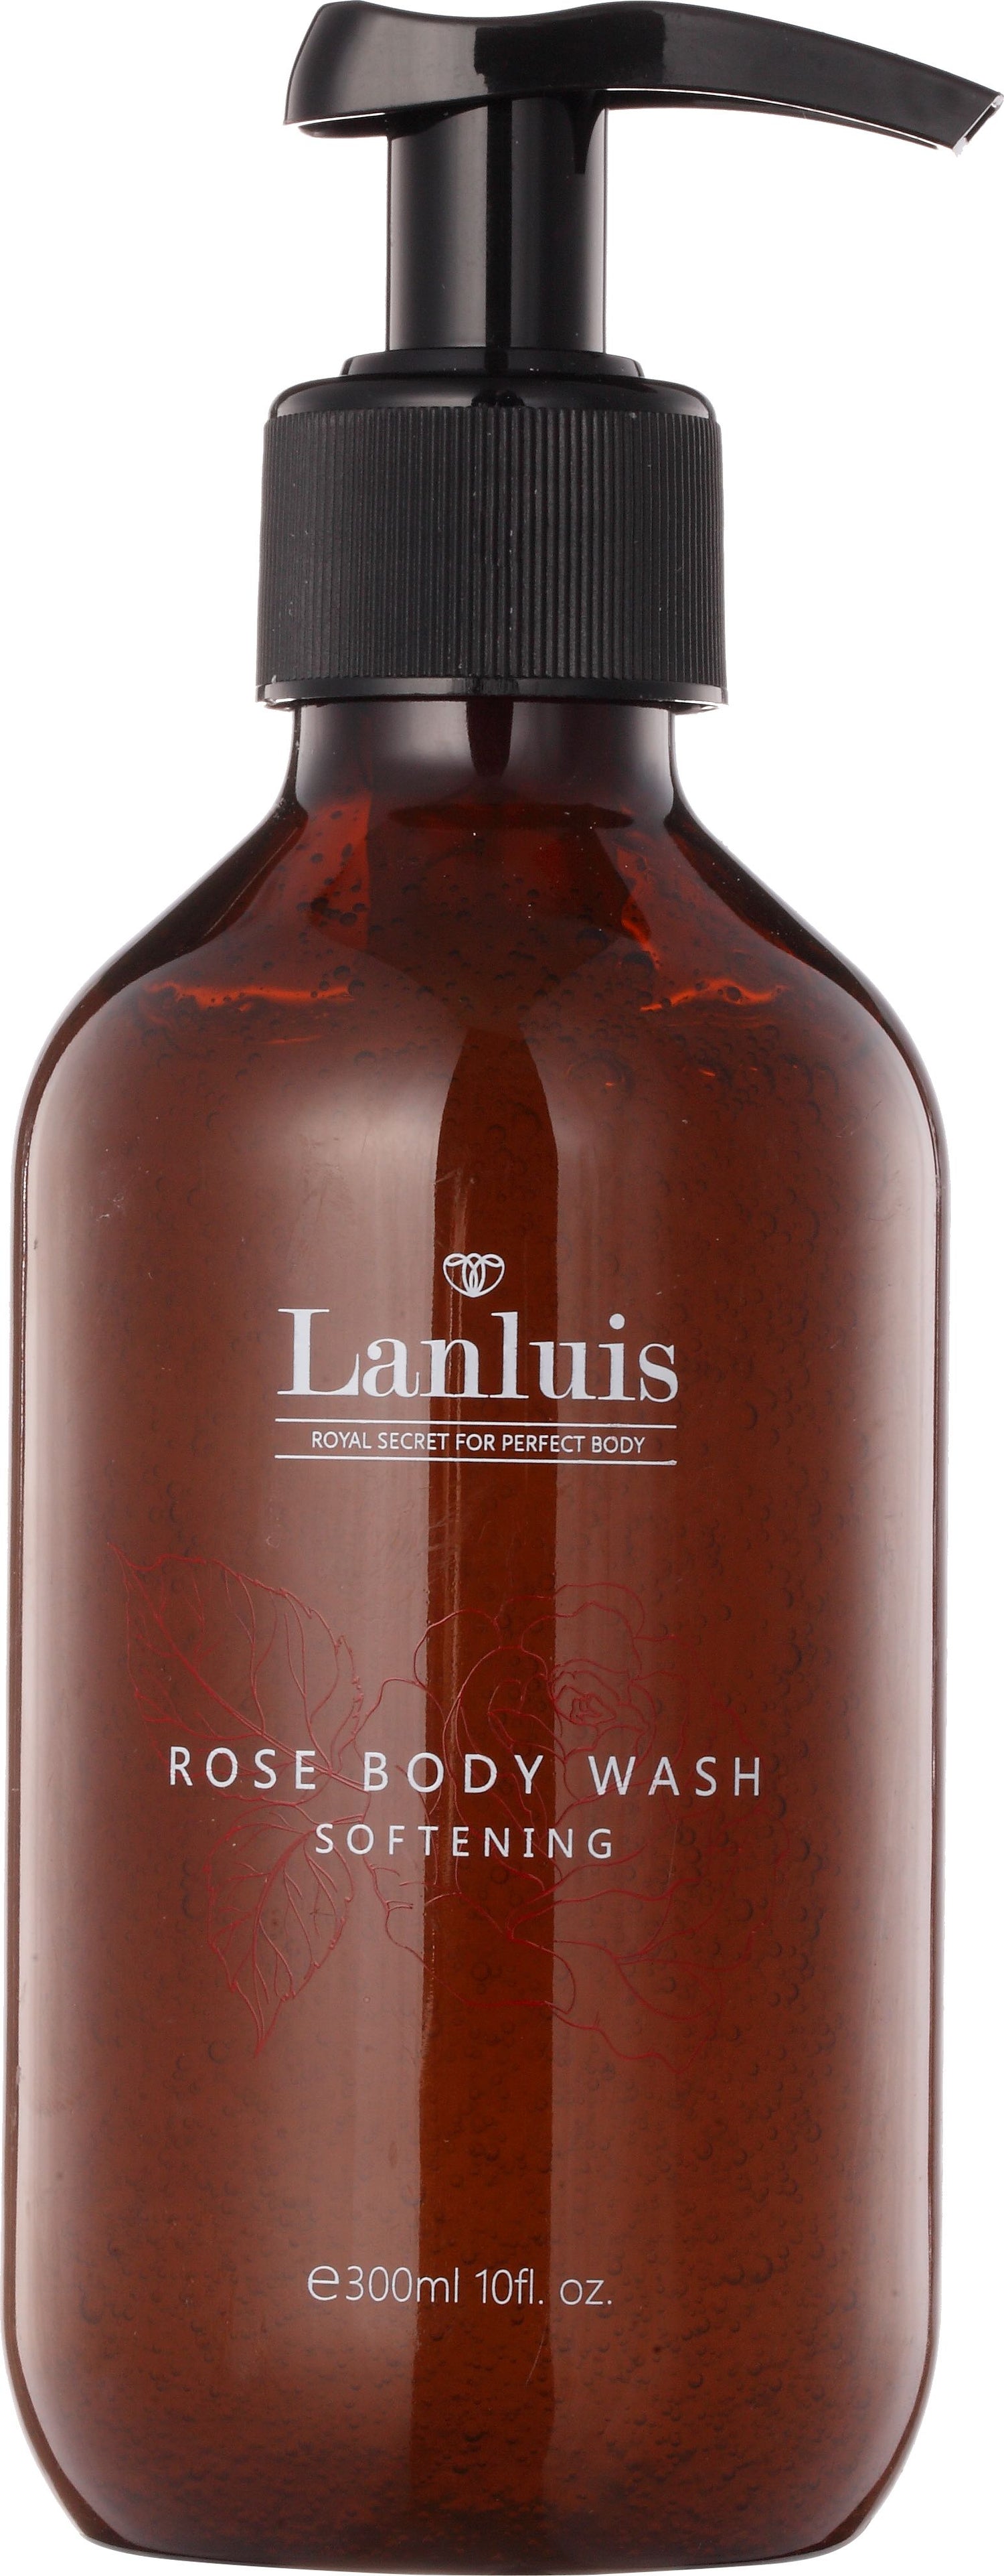 Rose Body Wash - Softening